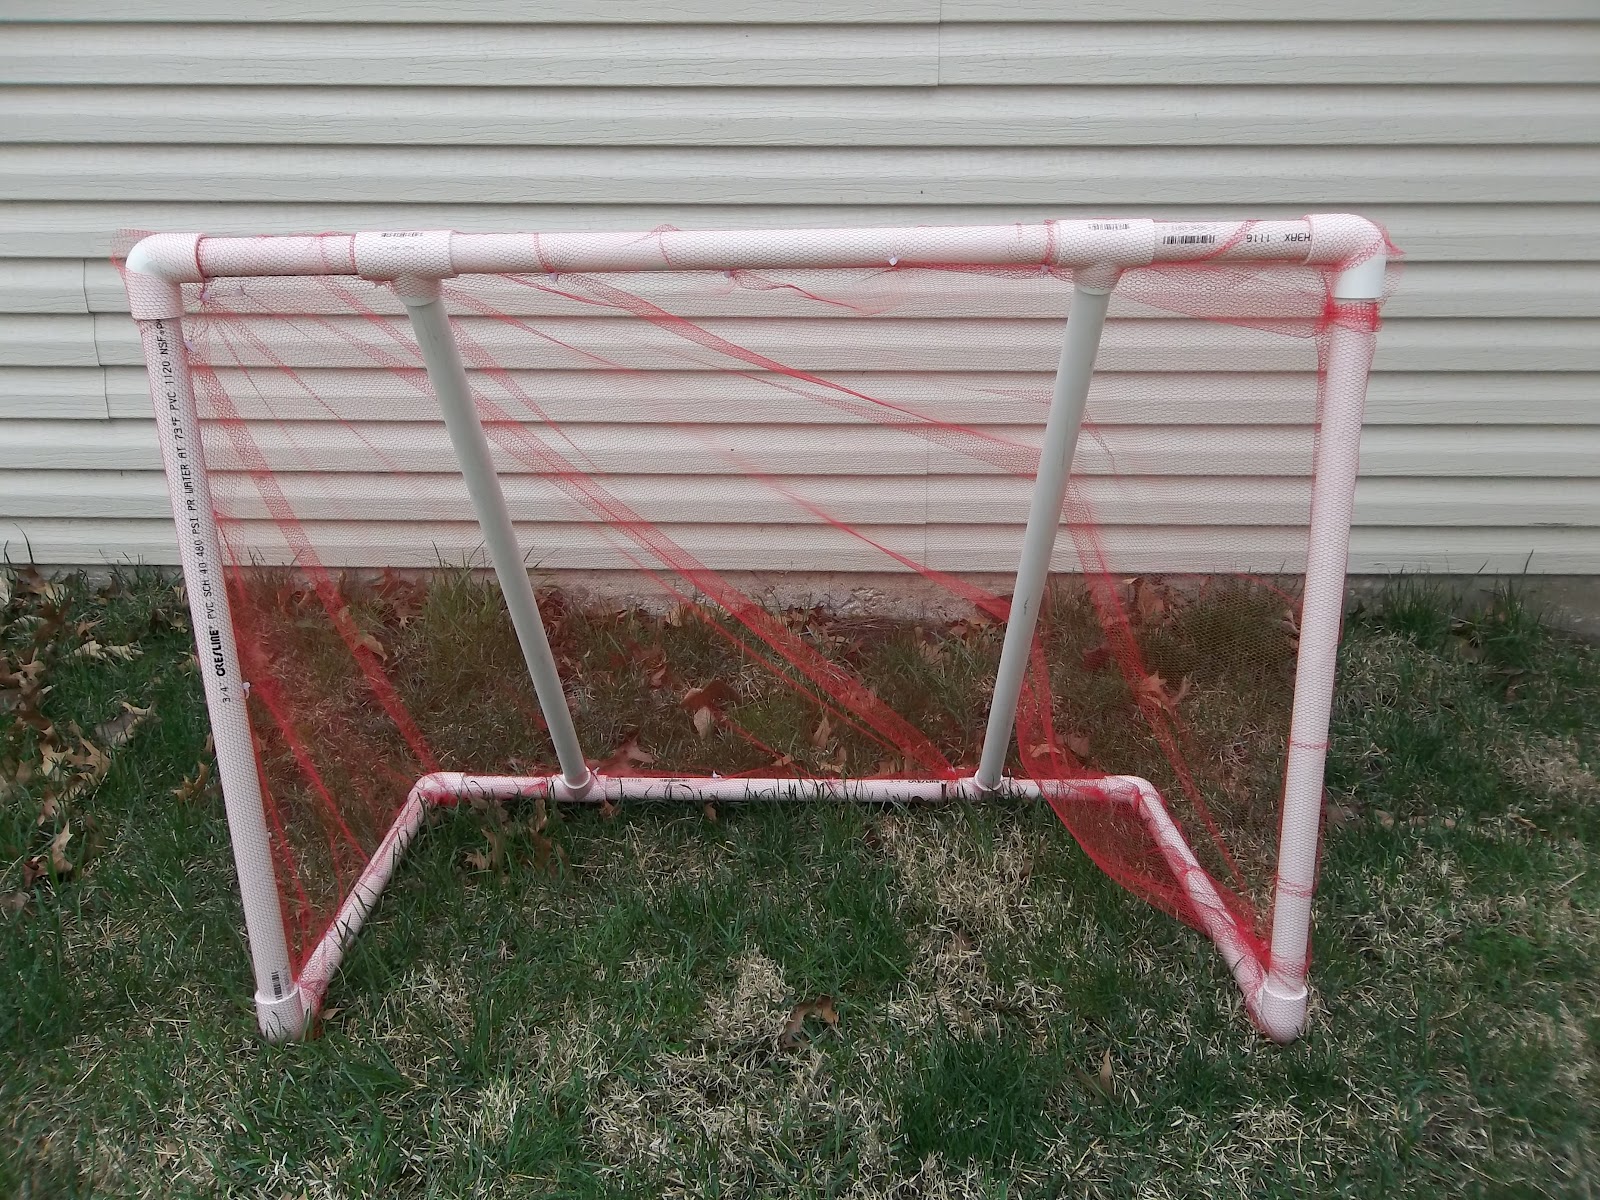 PVC Pipe Soccer Goal